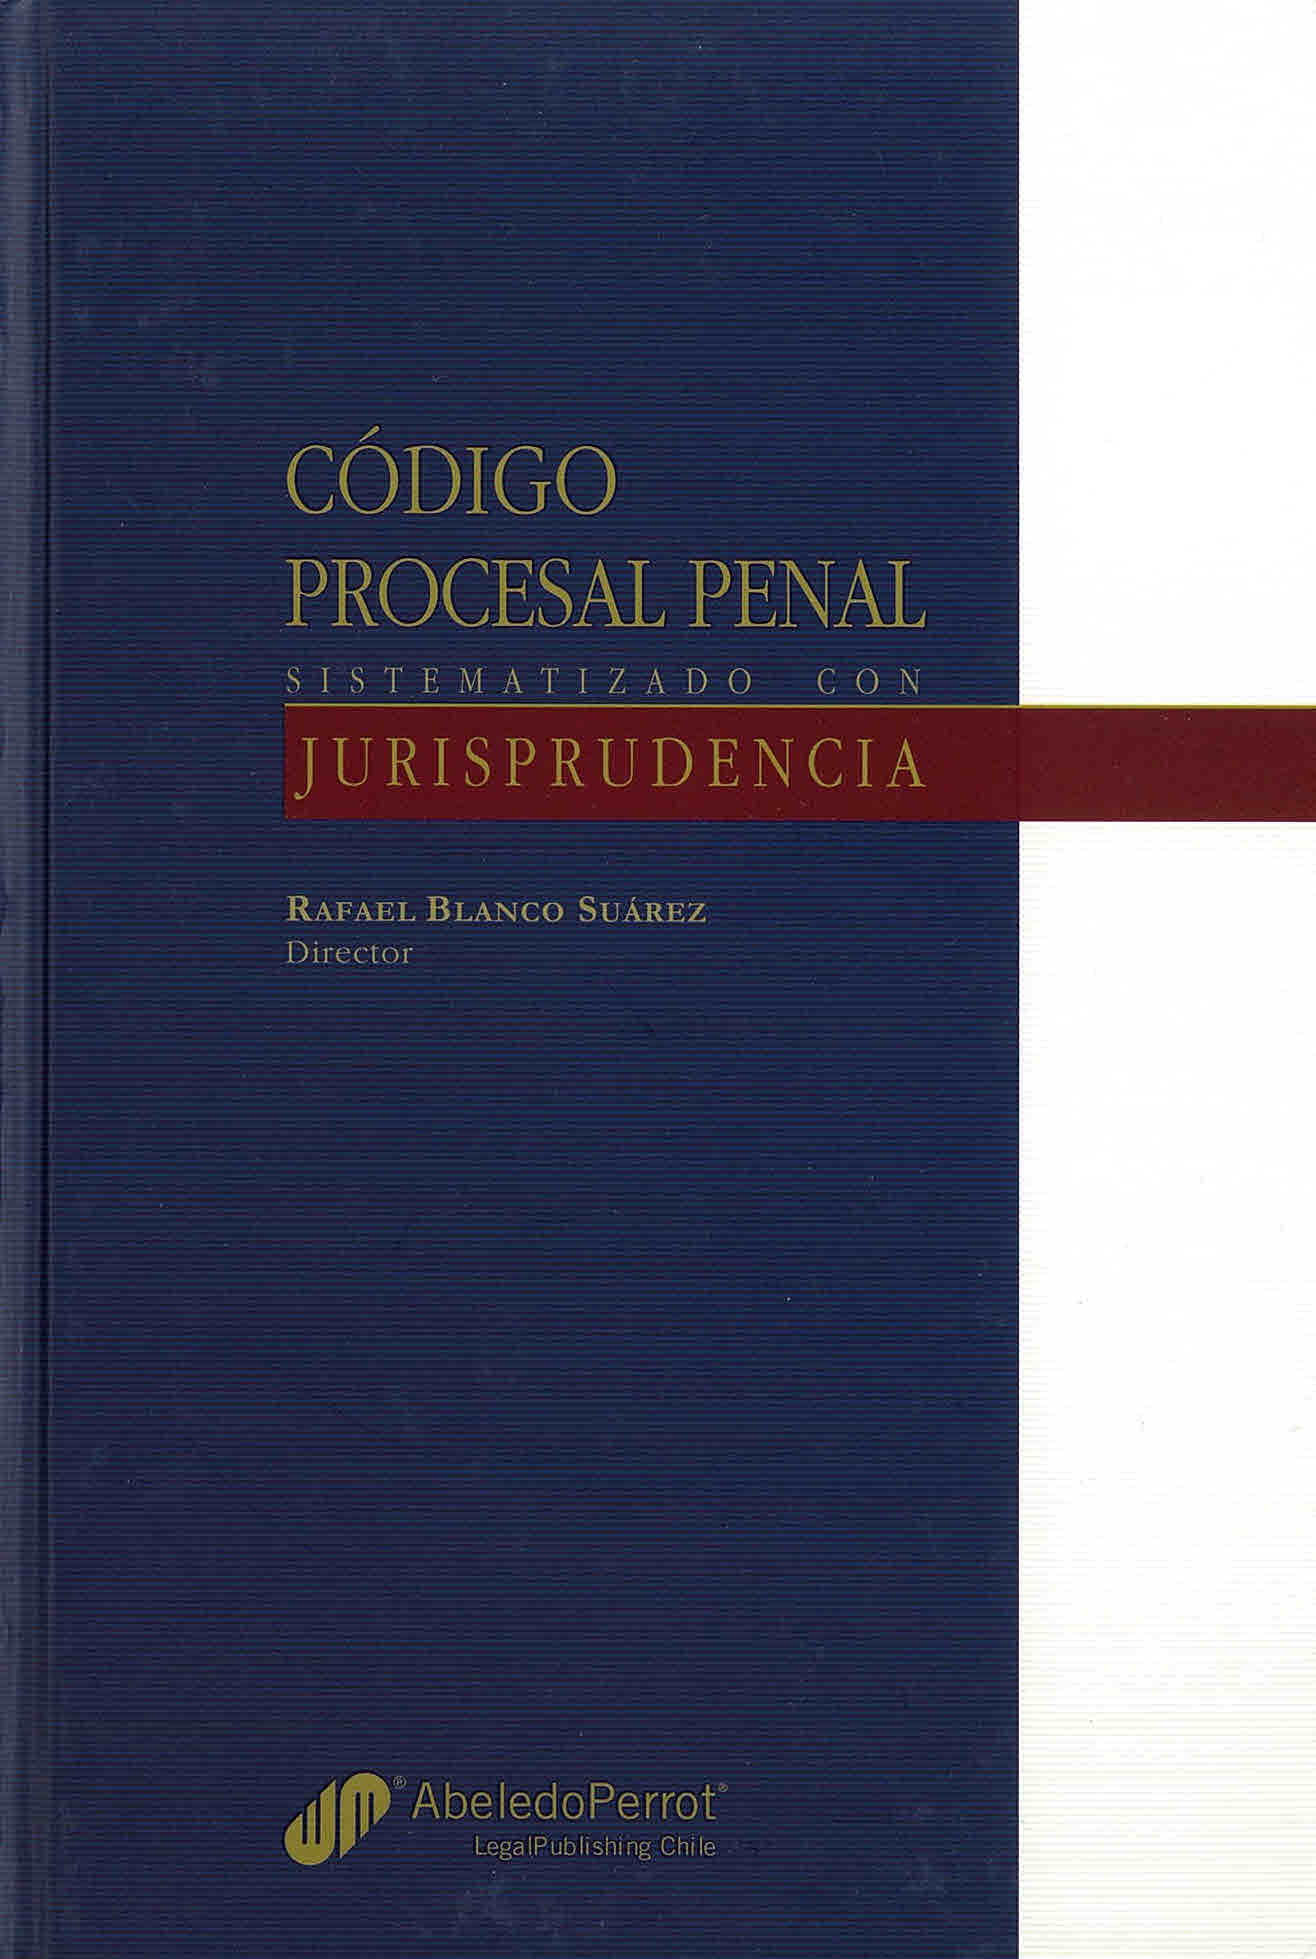 Código procesal penal sistematizado con jurisprudencia